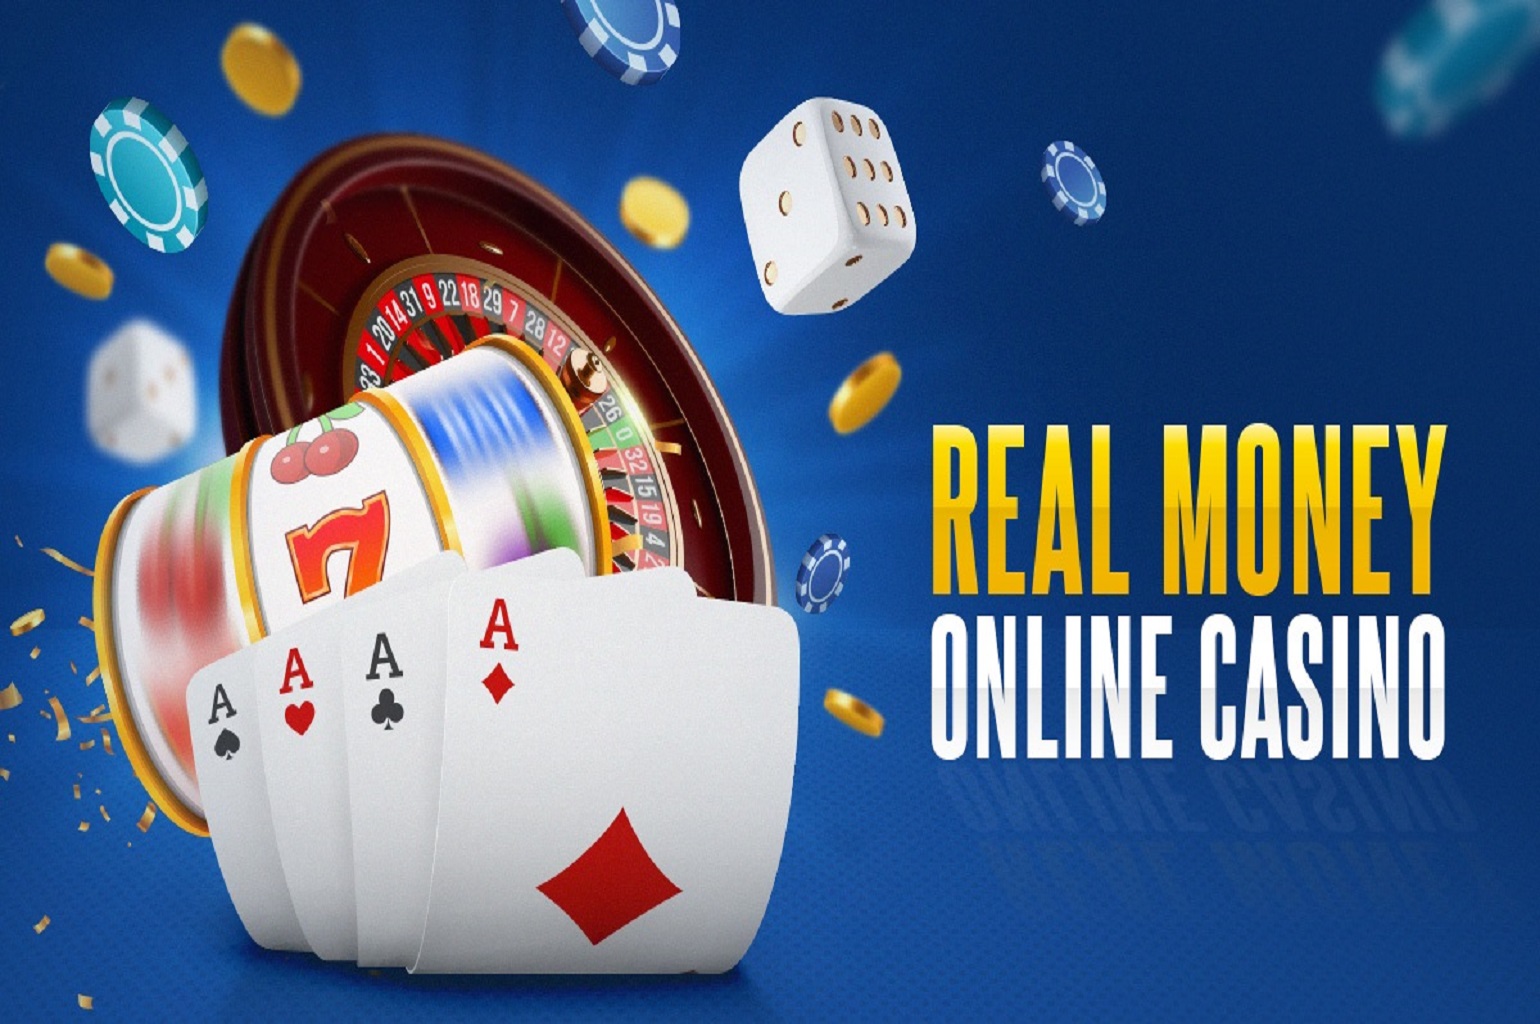 Play online casino for real money in детские дешёвые игровые автоматы